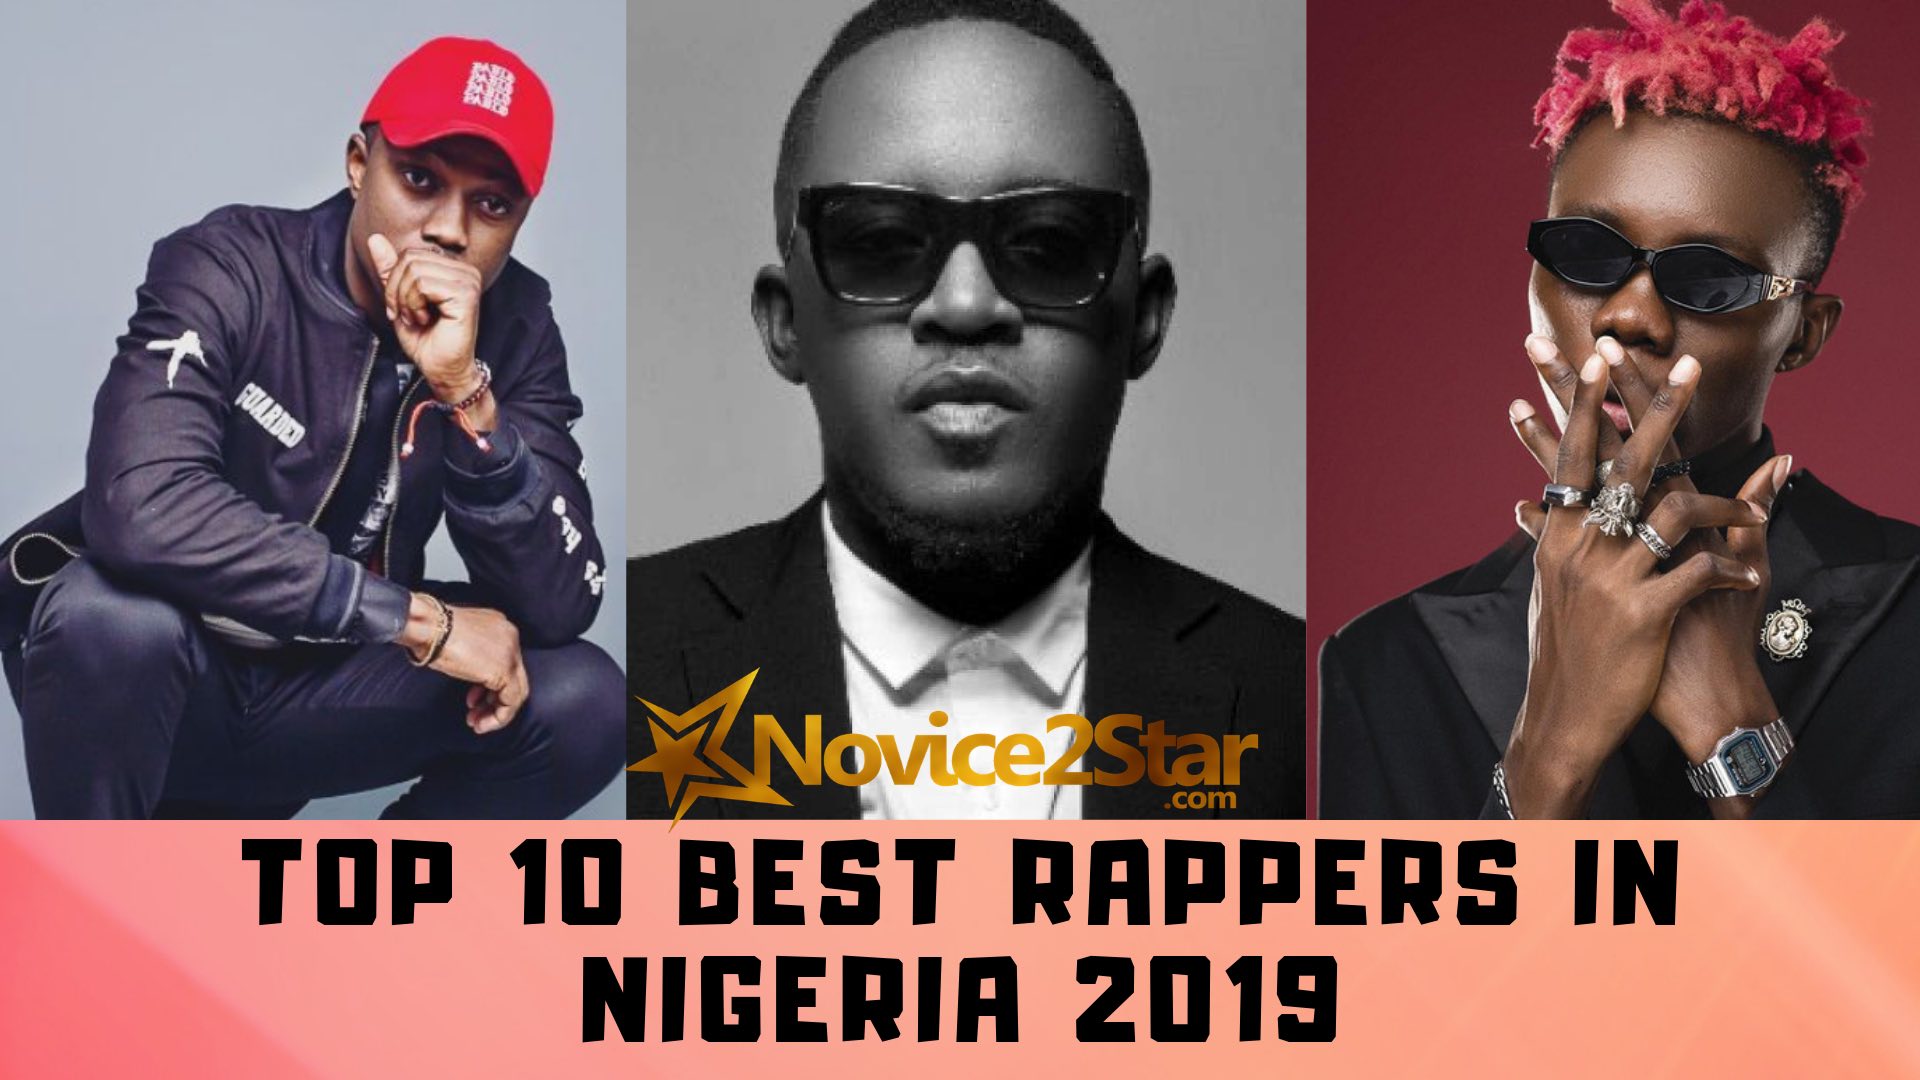 10 Best Rappers in Nigeria - Novice2star